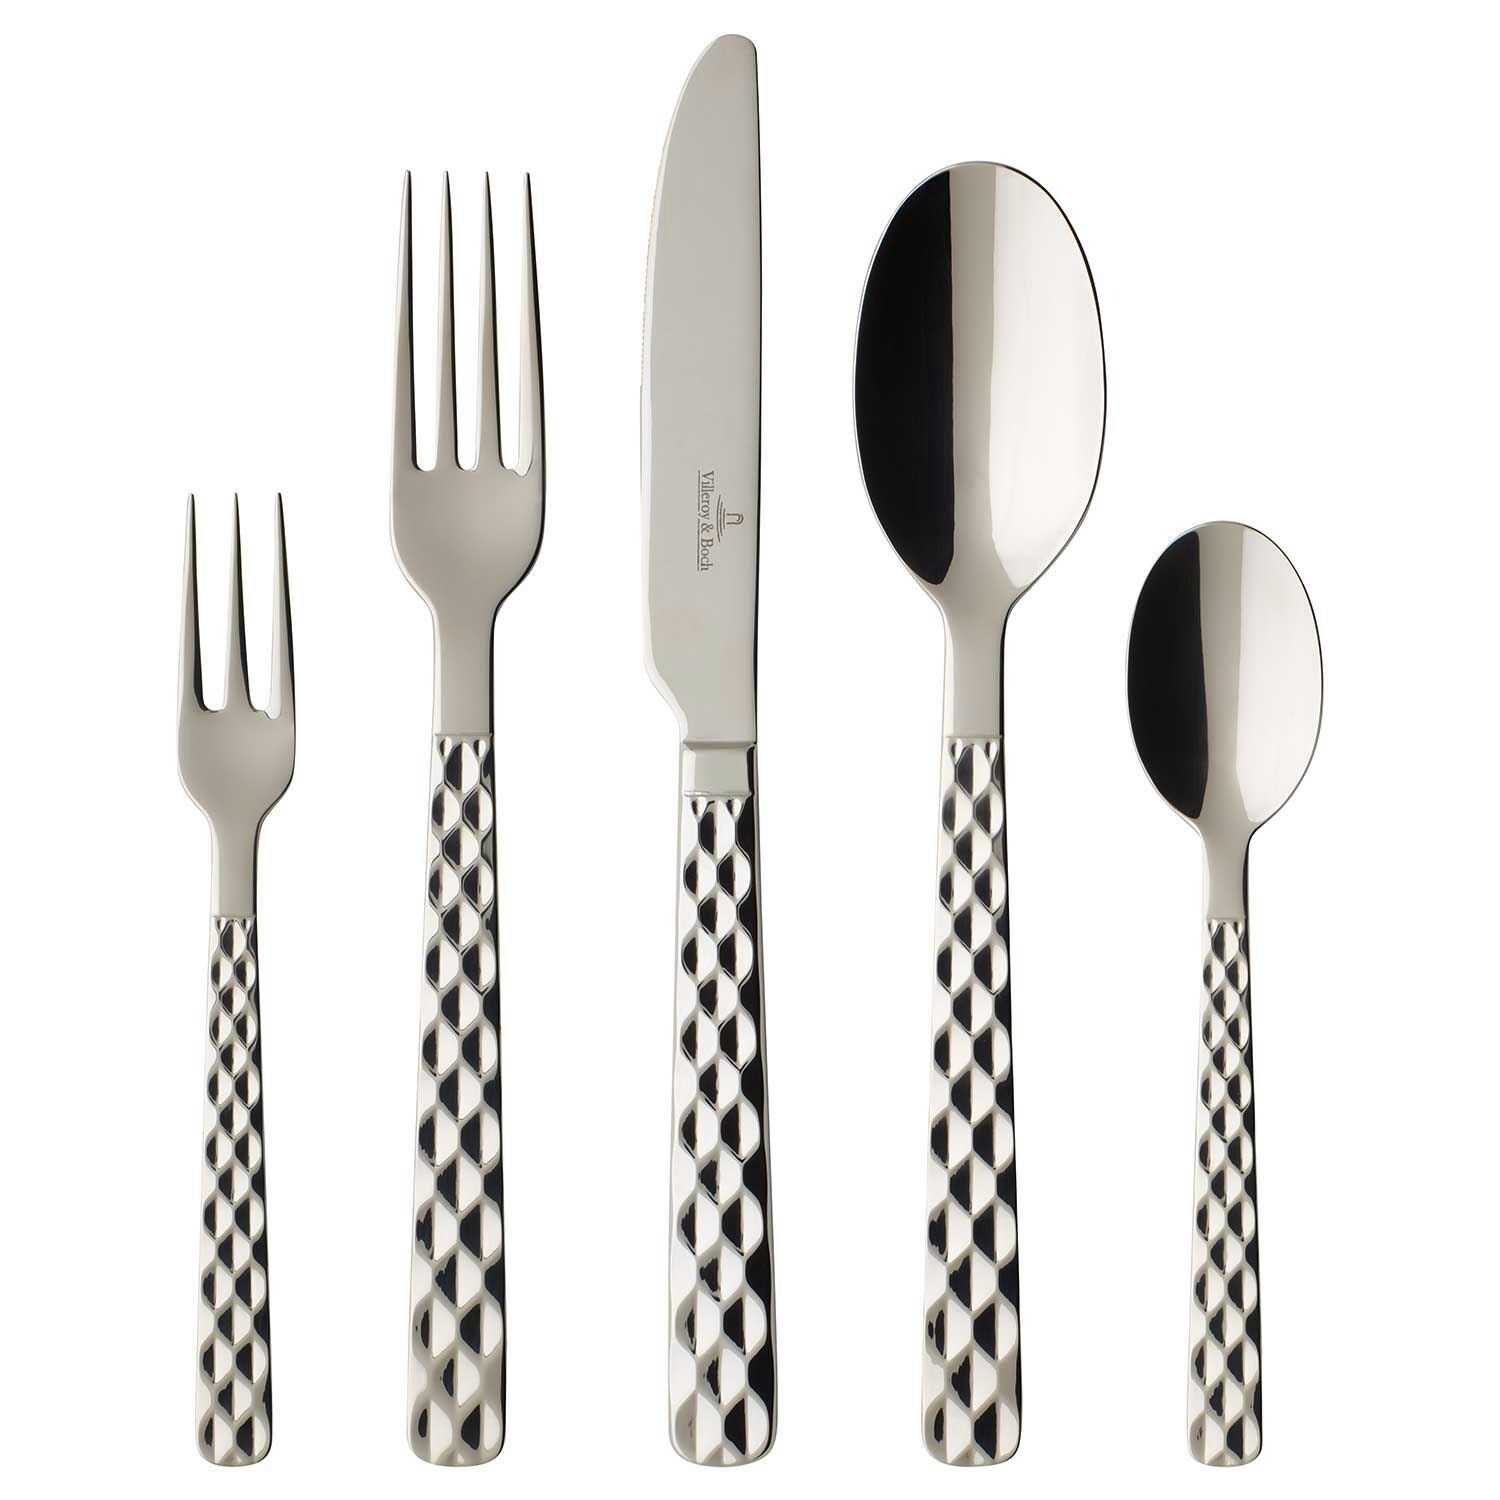 https://royaldesign.com/image/2/villeroy-boch-boston-cutlery-set-30-pcs-stainless-steel-0